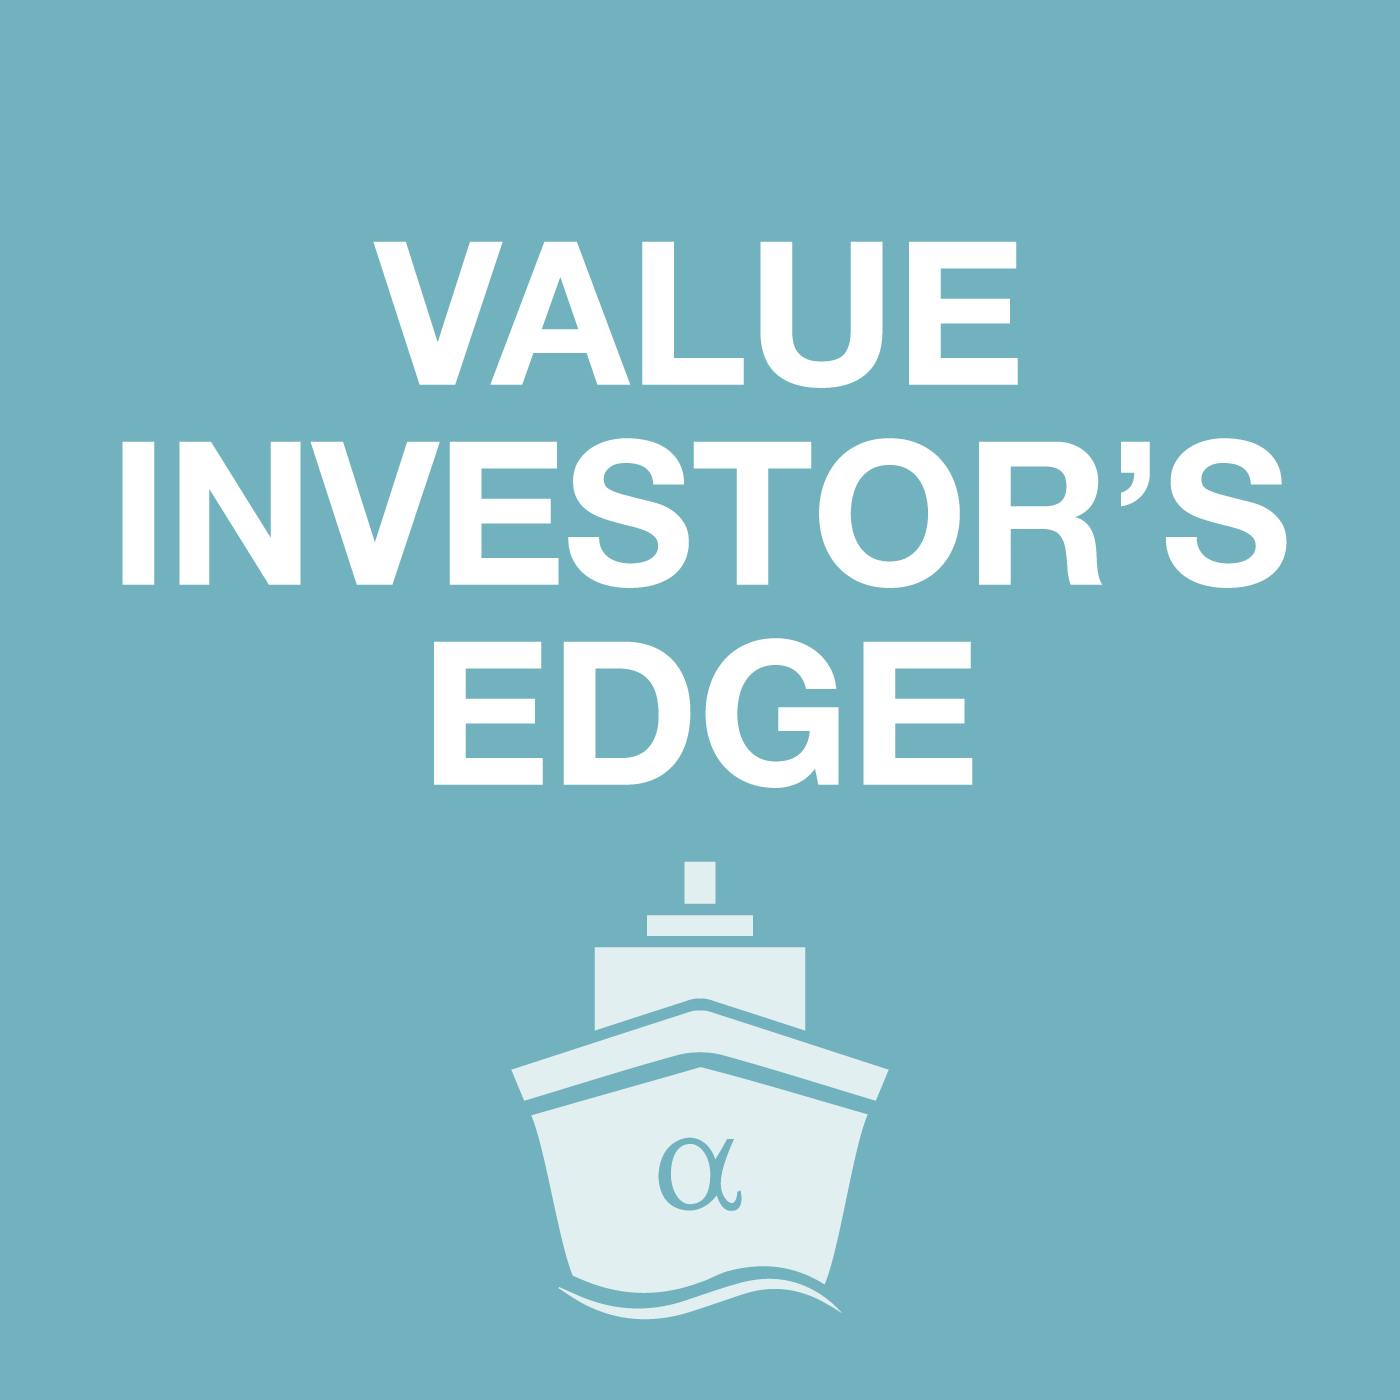 Value Investor's Edge Live #14: International Seaways' Management On The Tanker Markets